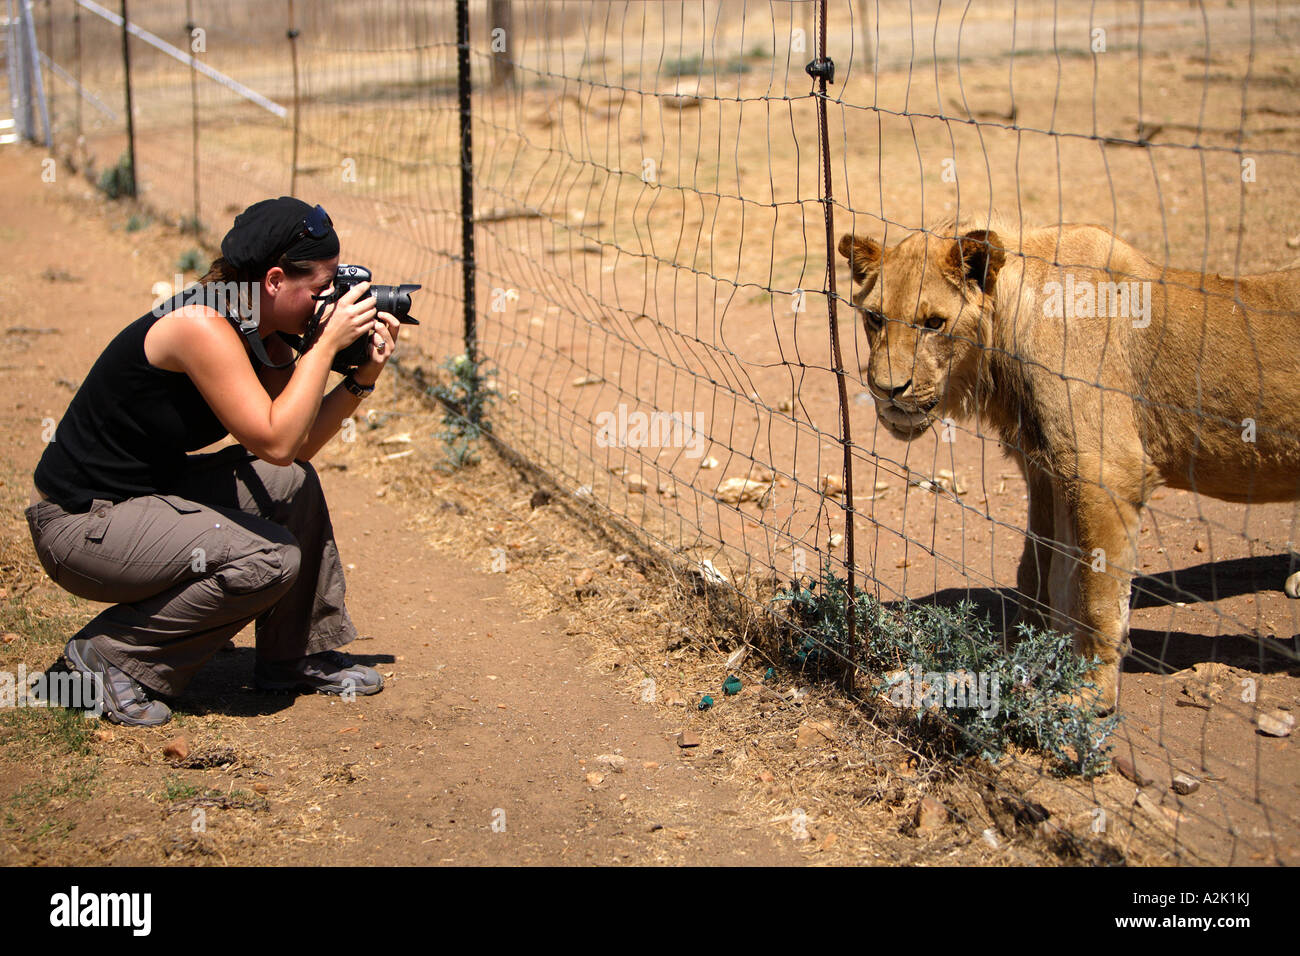 Lions in captivity, Panthera leo krugeri. South Africa. Stock Photo